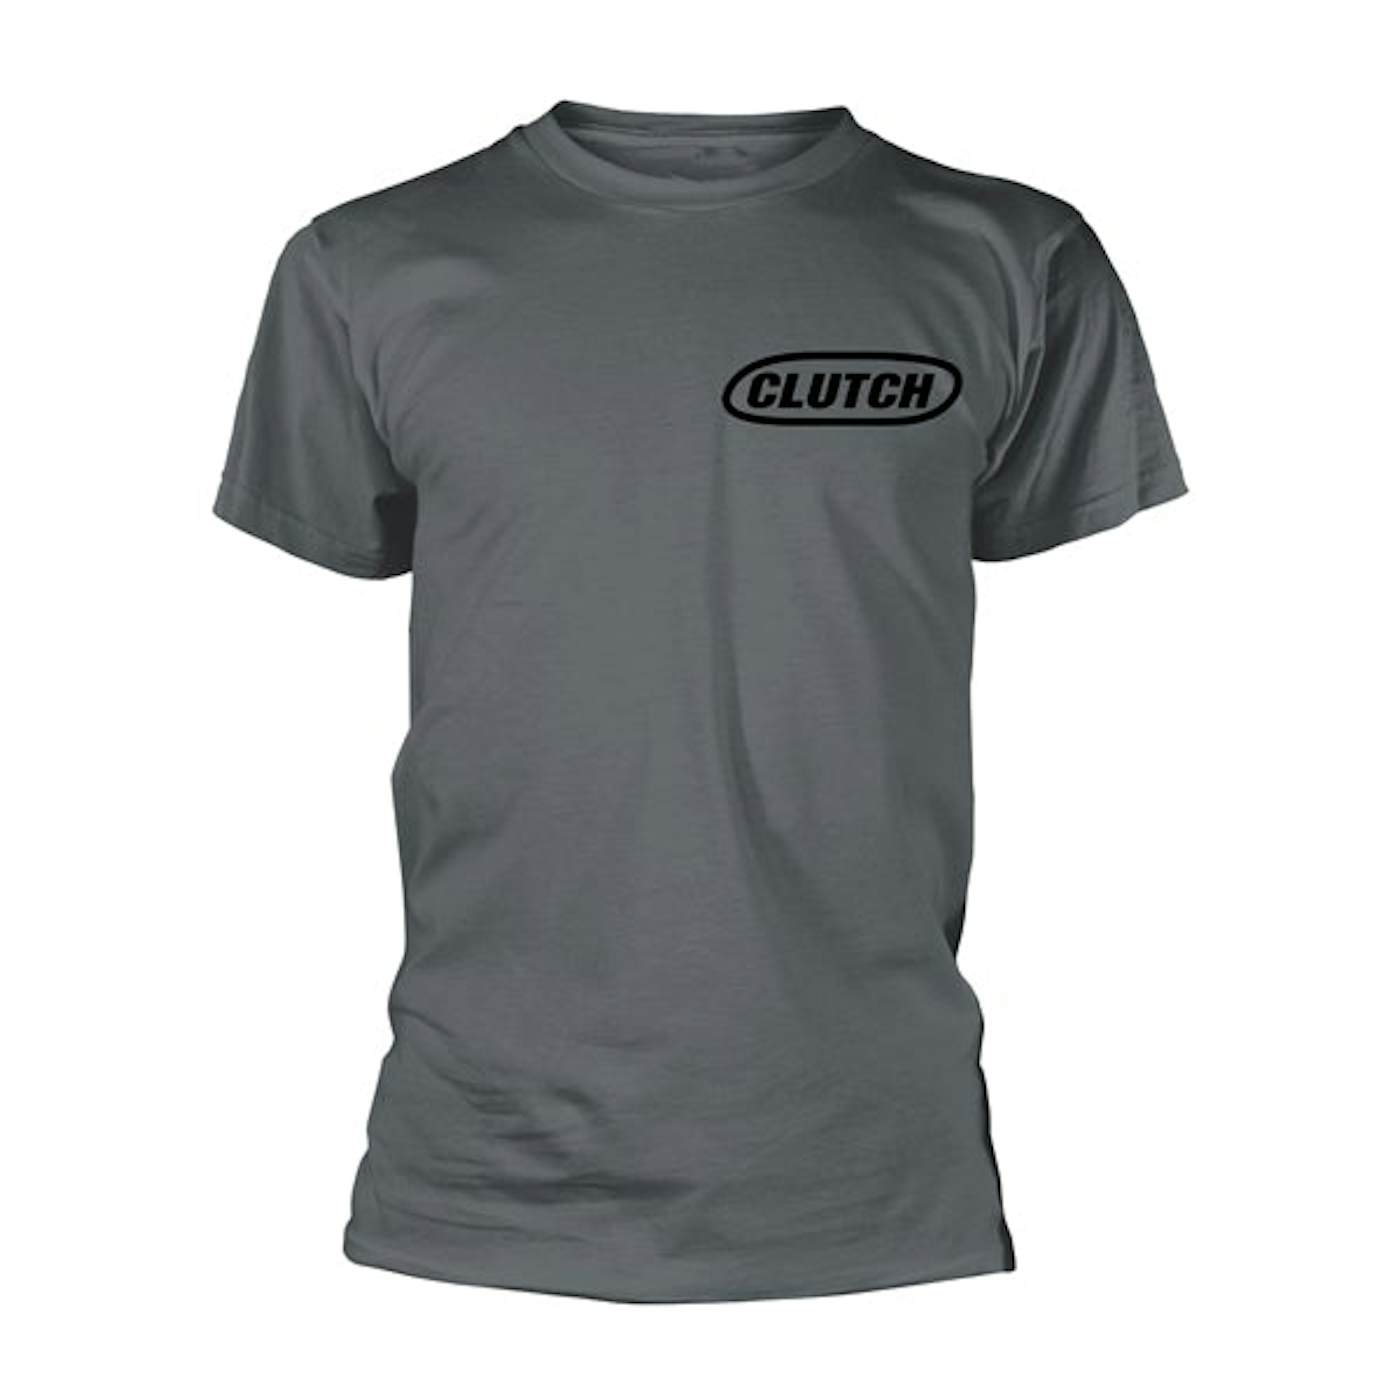 Clutch T-Shirt - Classic Logo (Black/Grey)